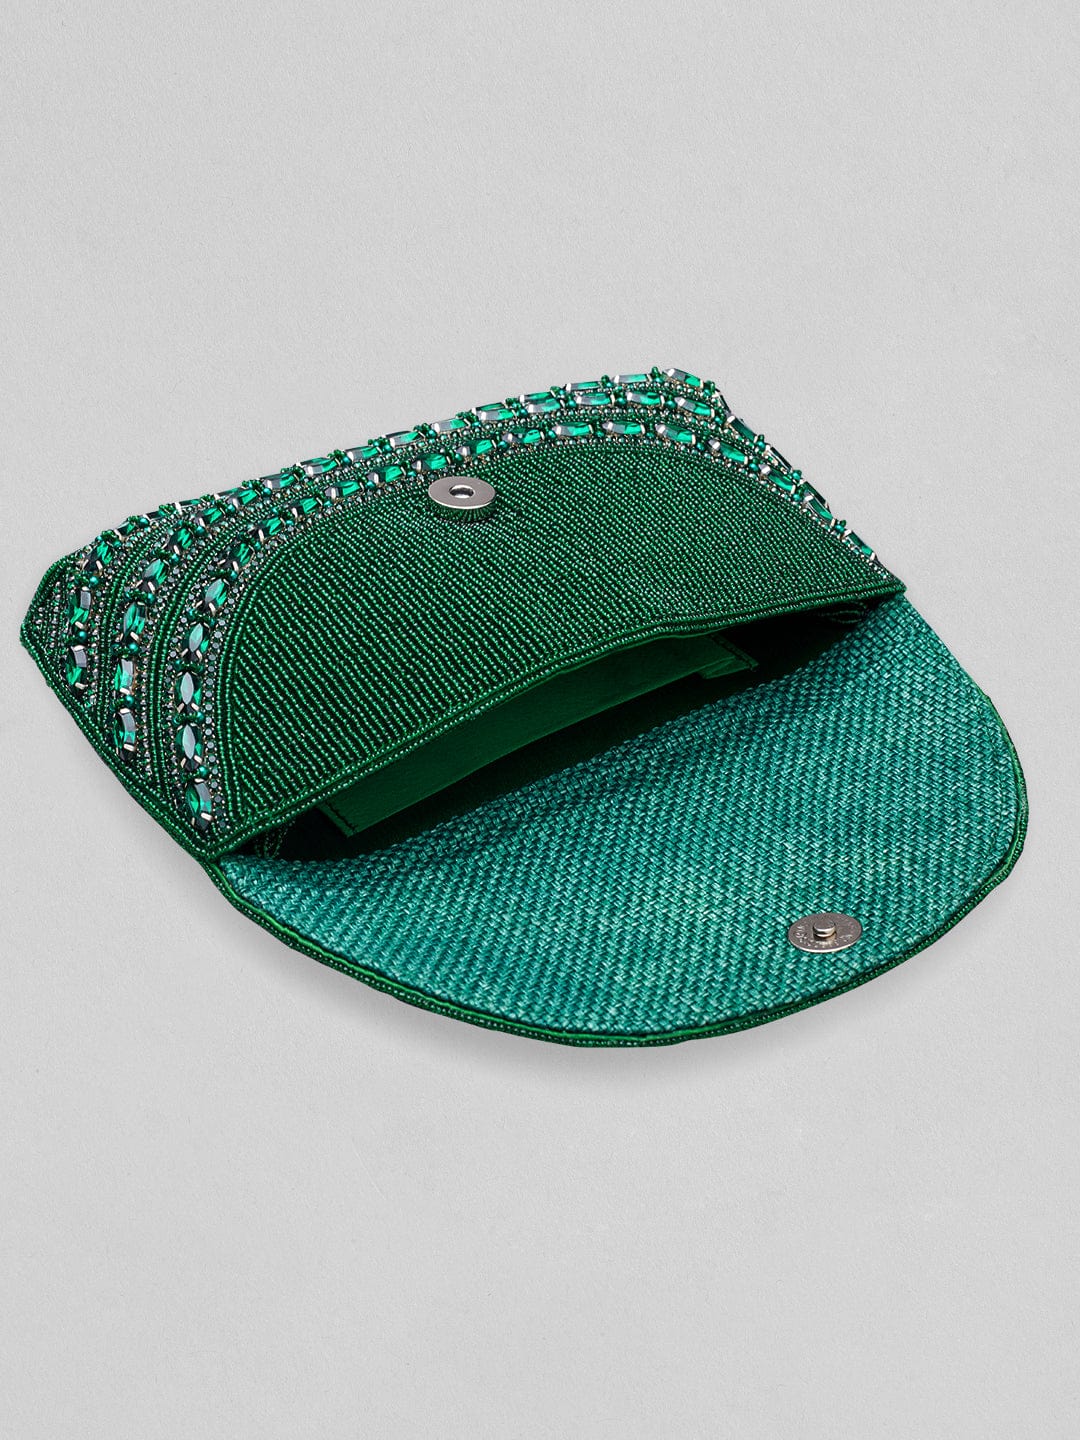 Rubans Green Colour Handbag With Embroided Green Stone Design. Handbag & Wallet Accessories